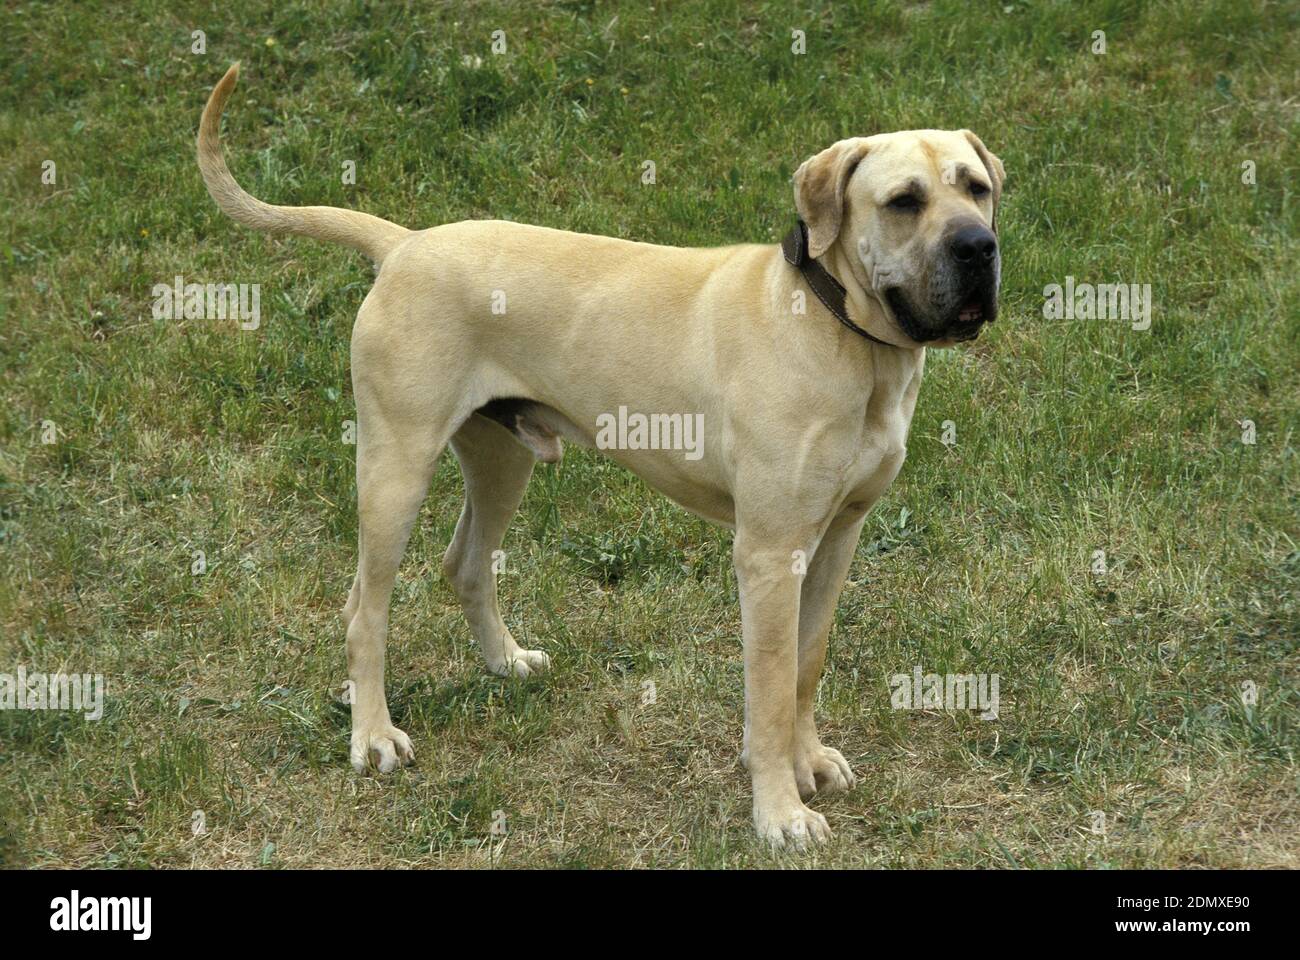 Dog breed fila brasileiro hi-res stock photography and images - Alamy